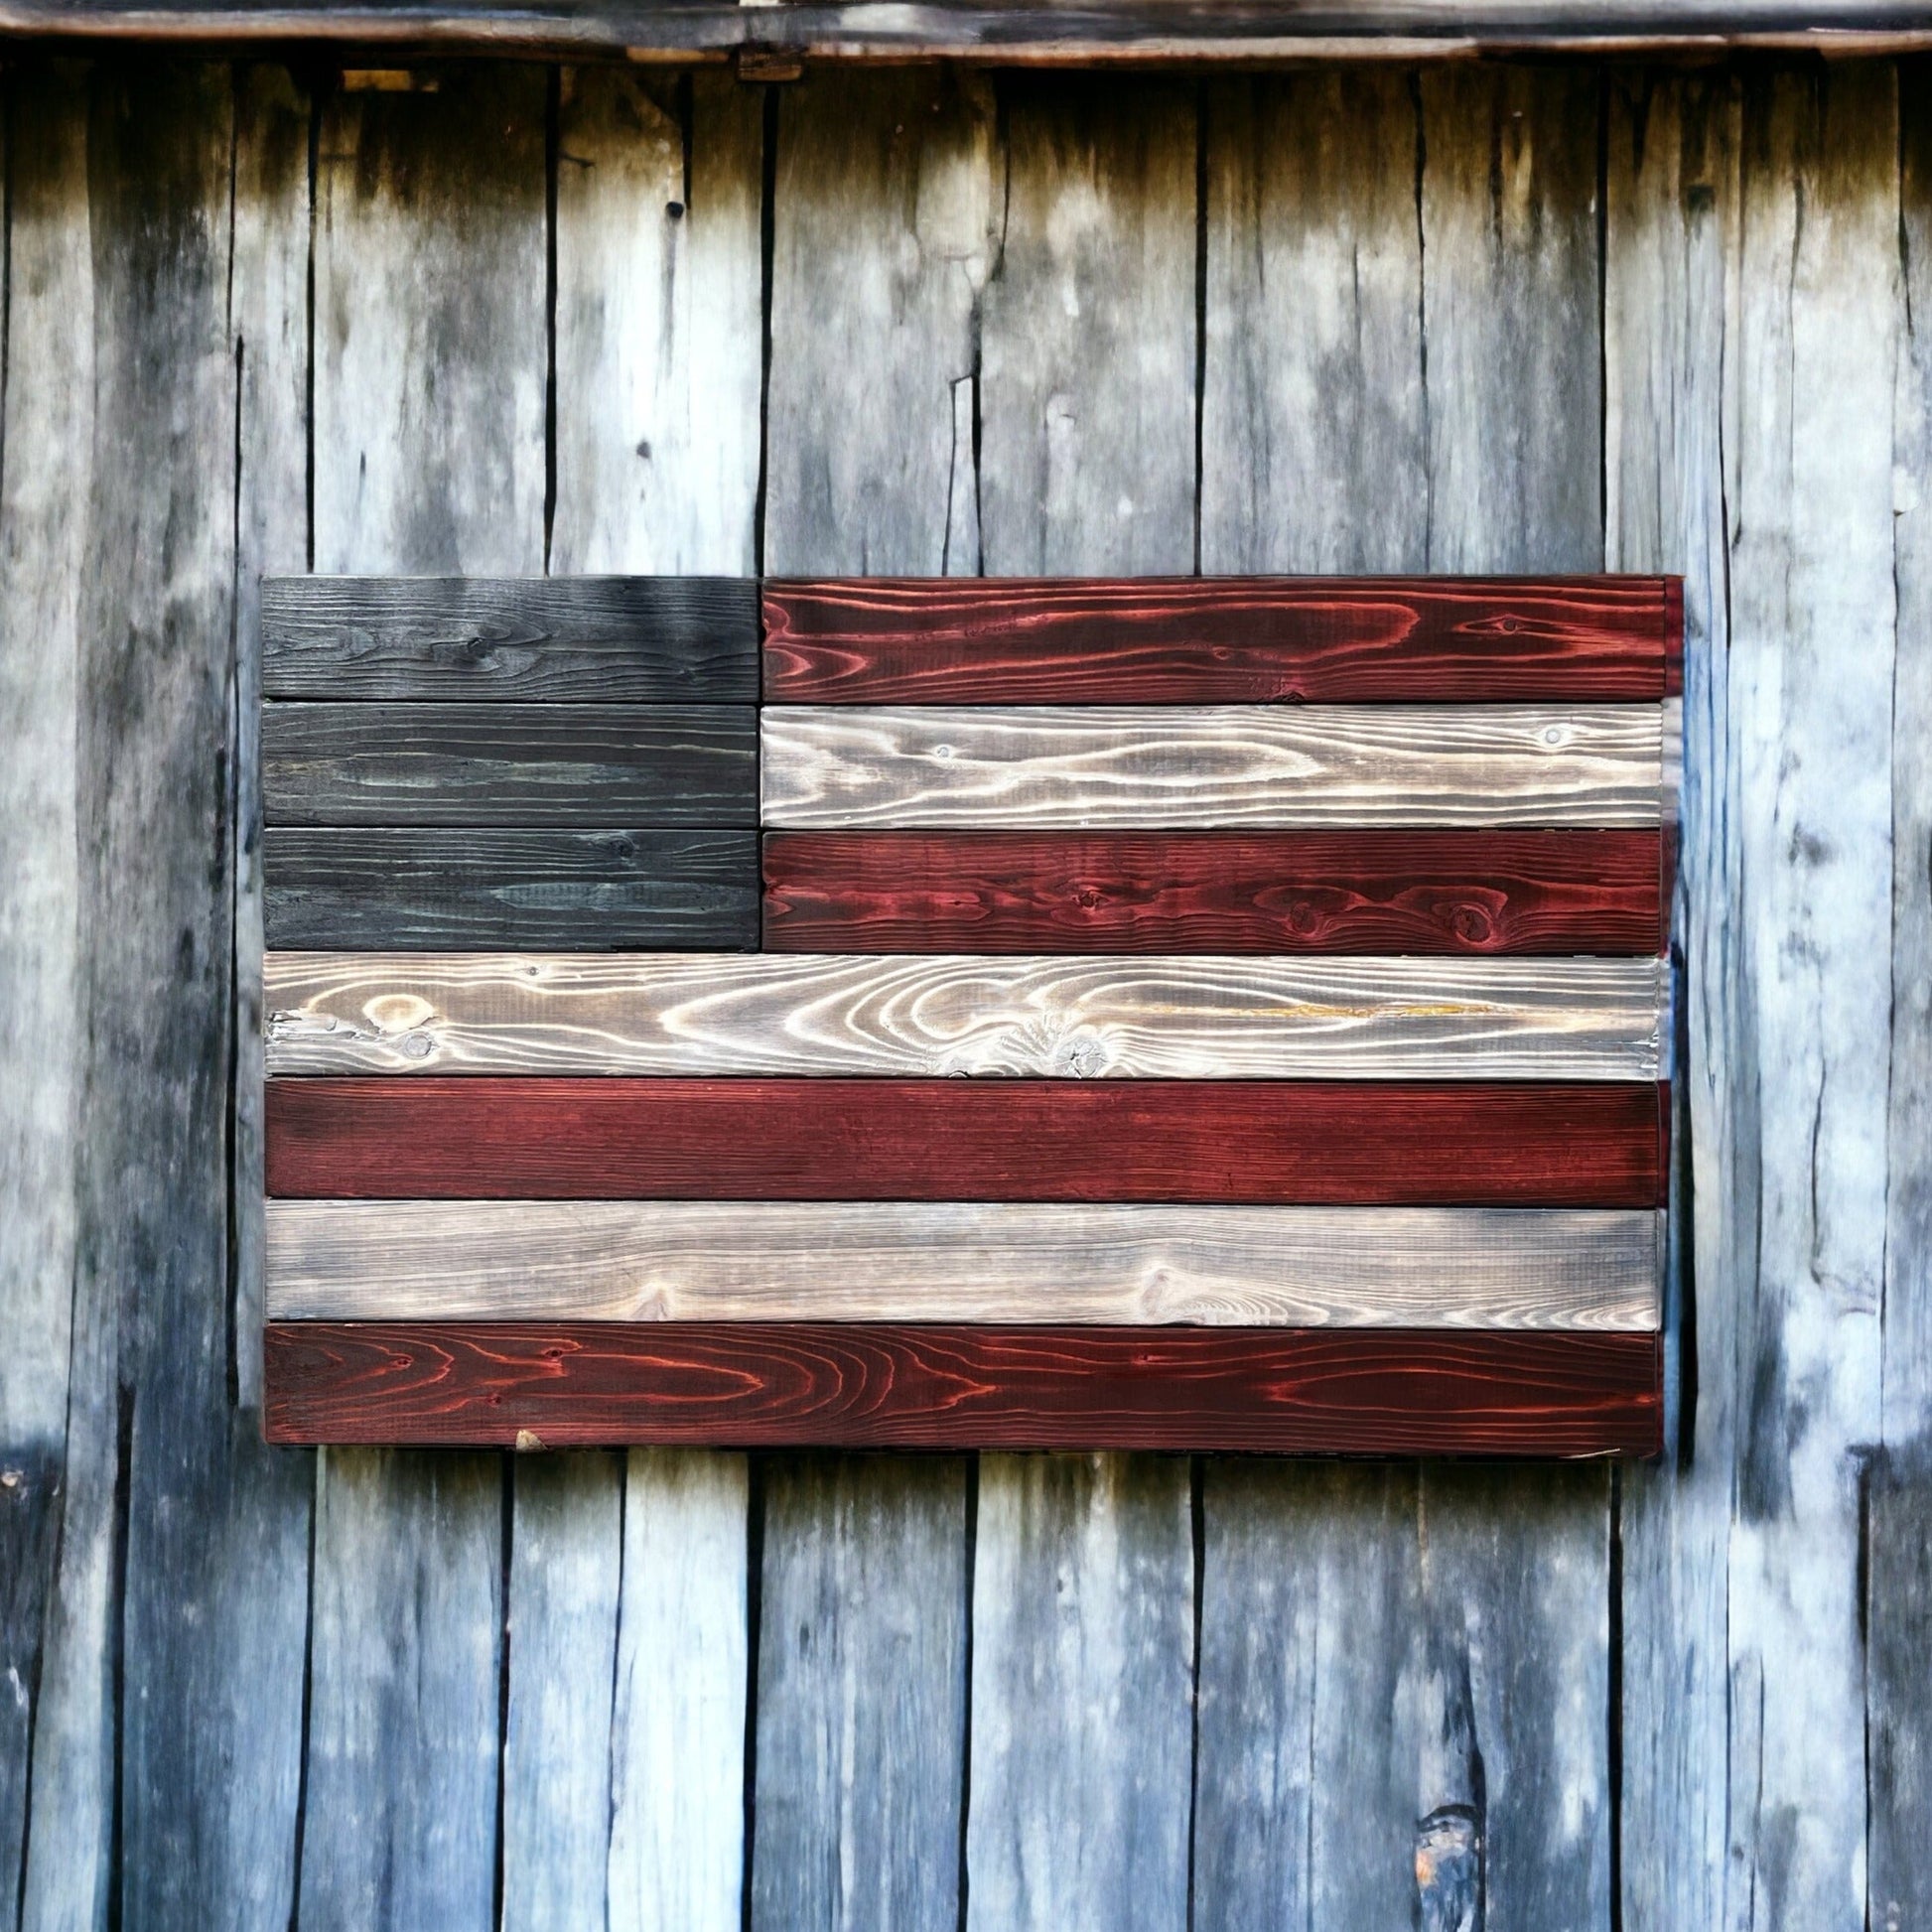 'Merica Solid Wood American Flag - Native Artistry